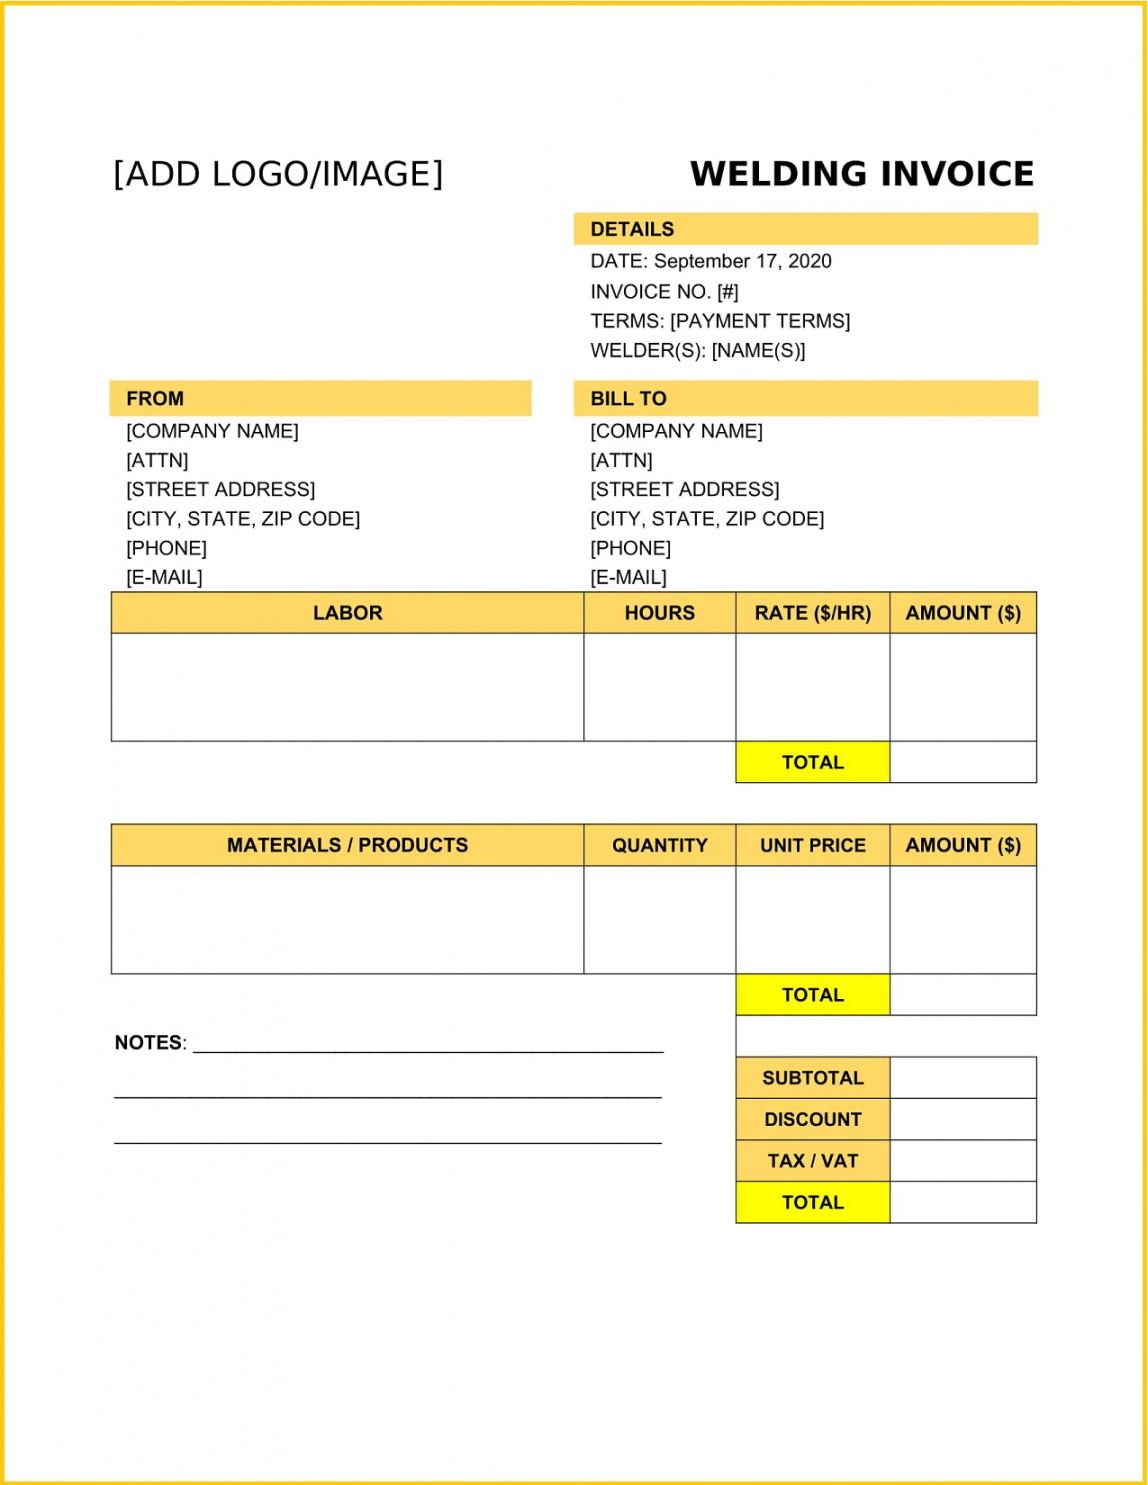 free welding invoice template example welding estimate template excel